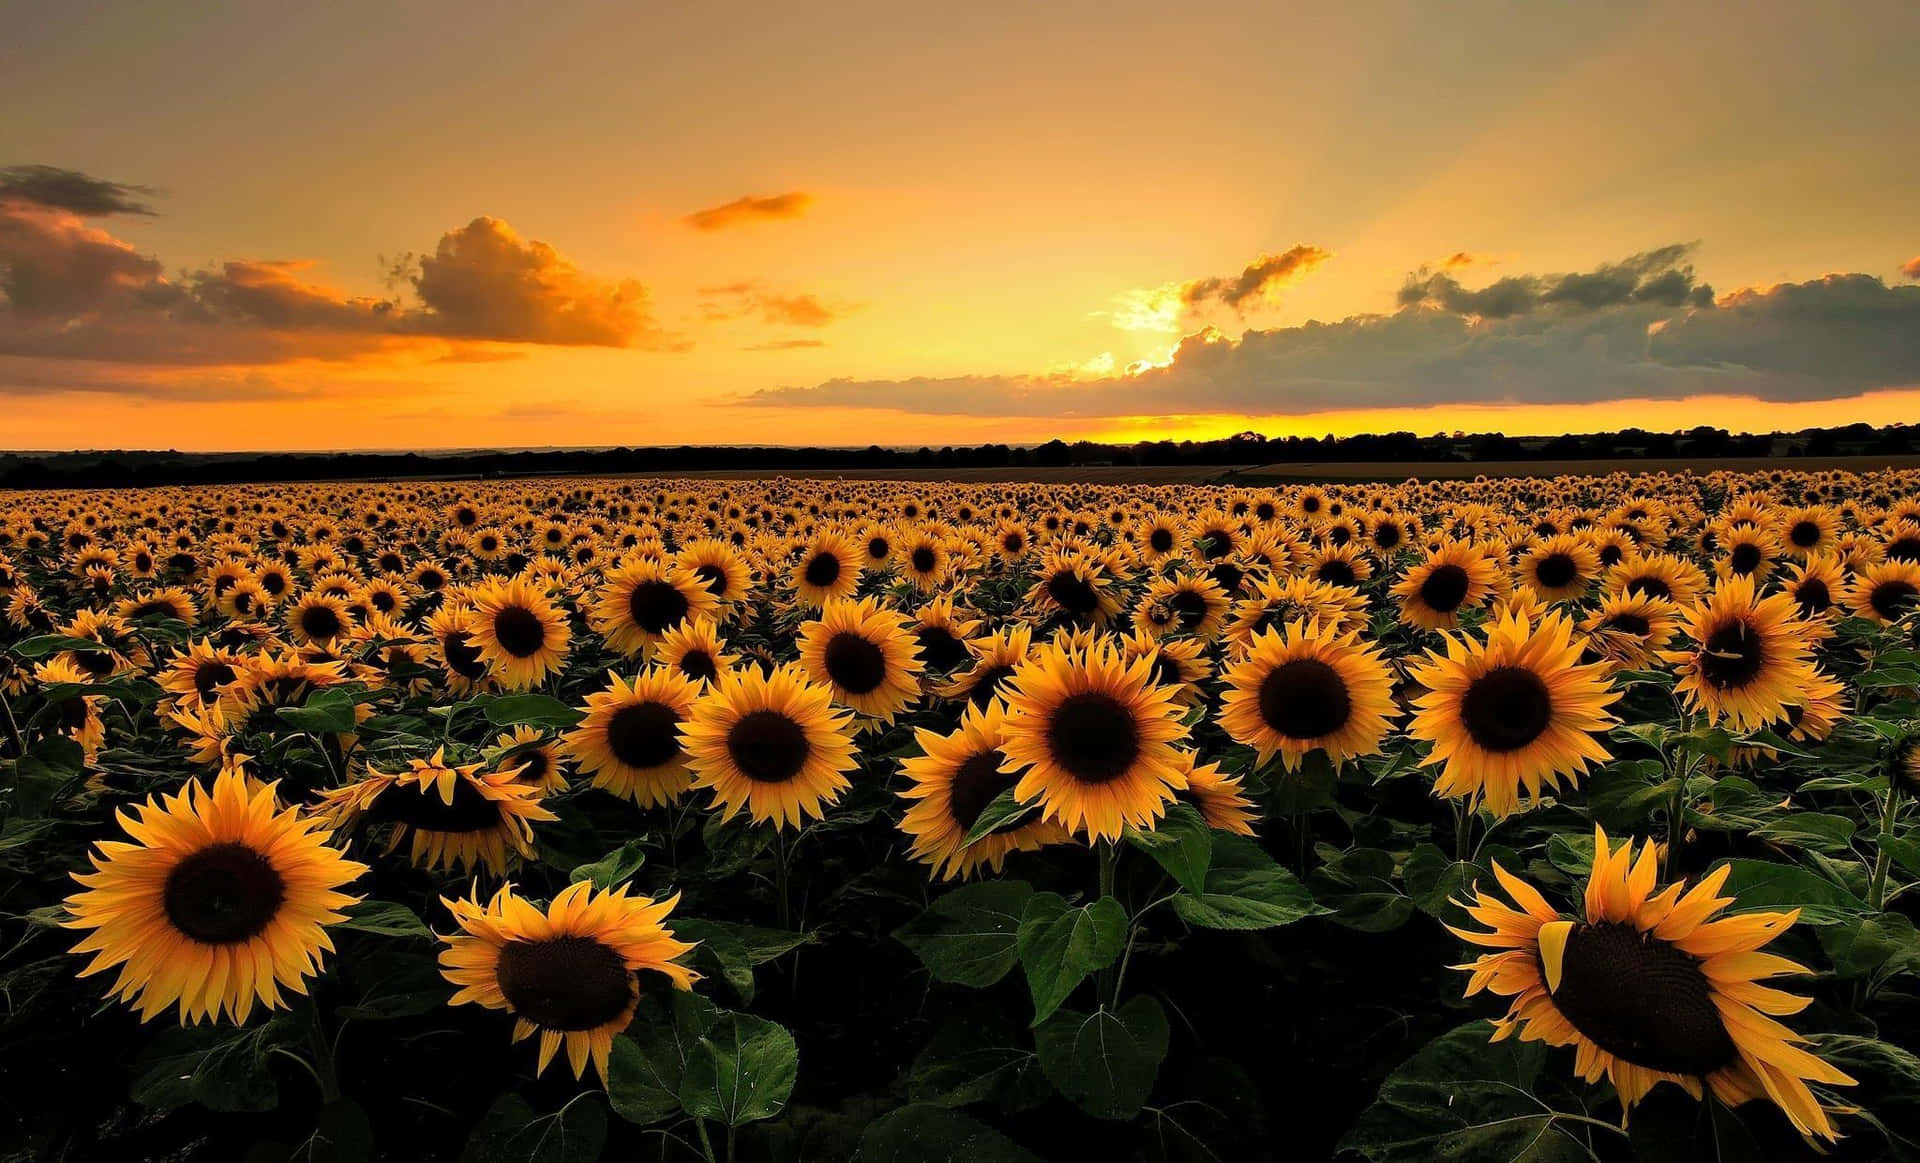 Enjoying the Beauty of a Vibrant Sunflower